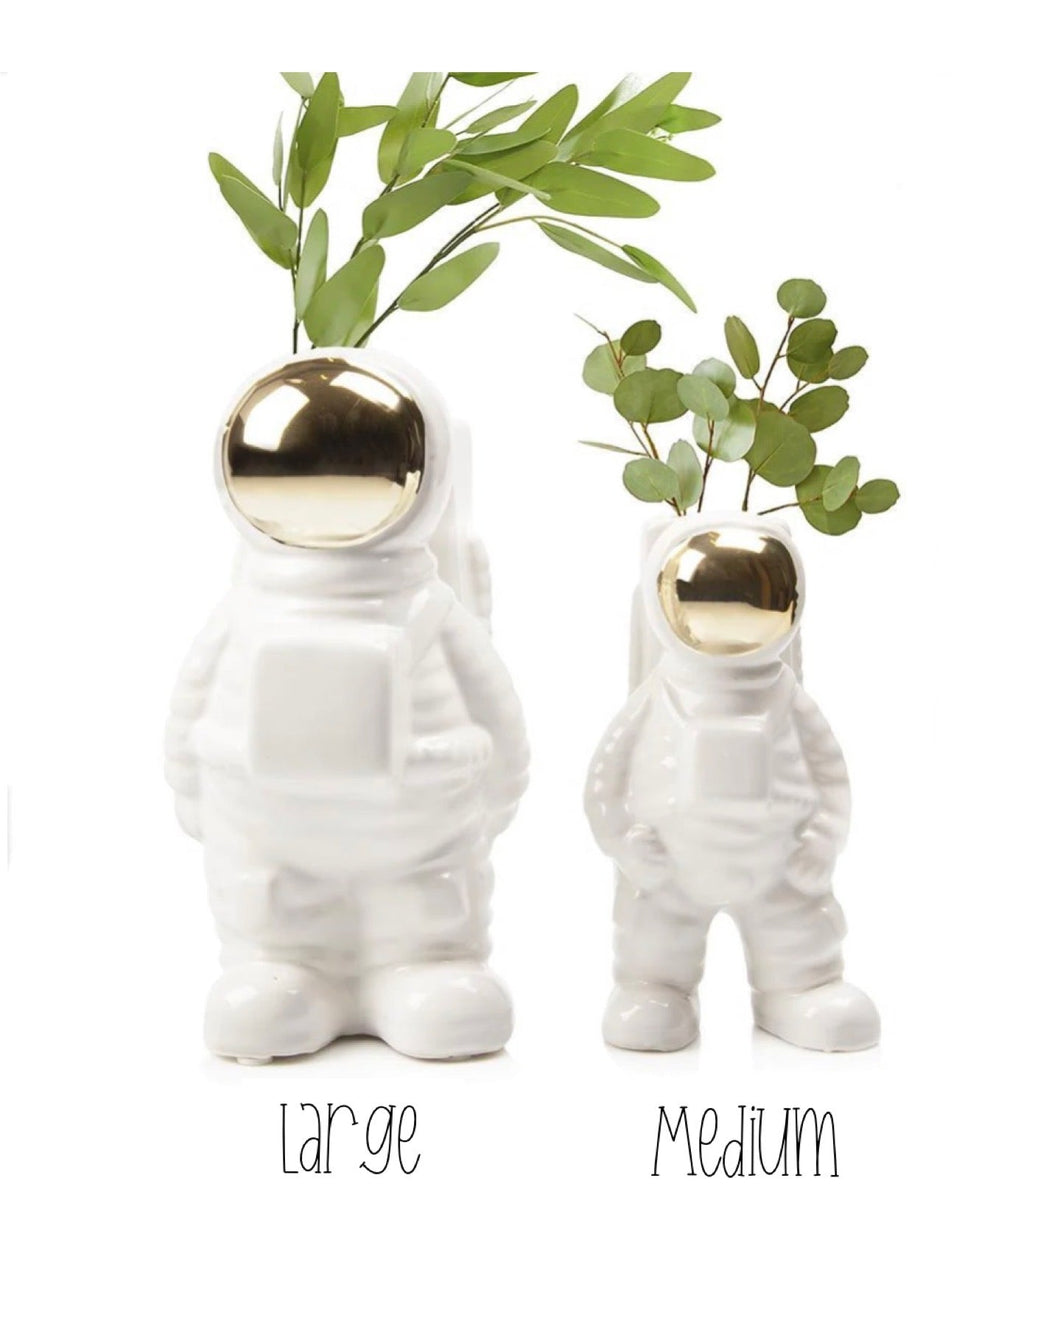 Astronaut Planter - The Seaside Succulent